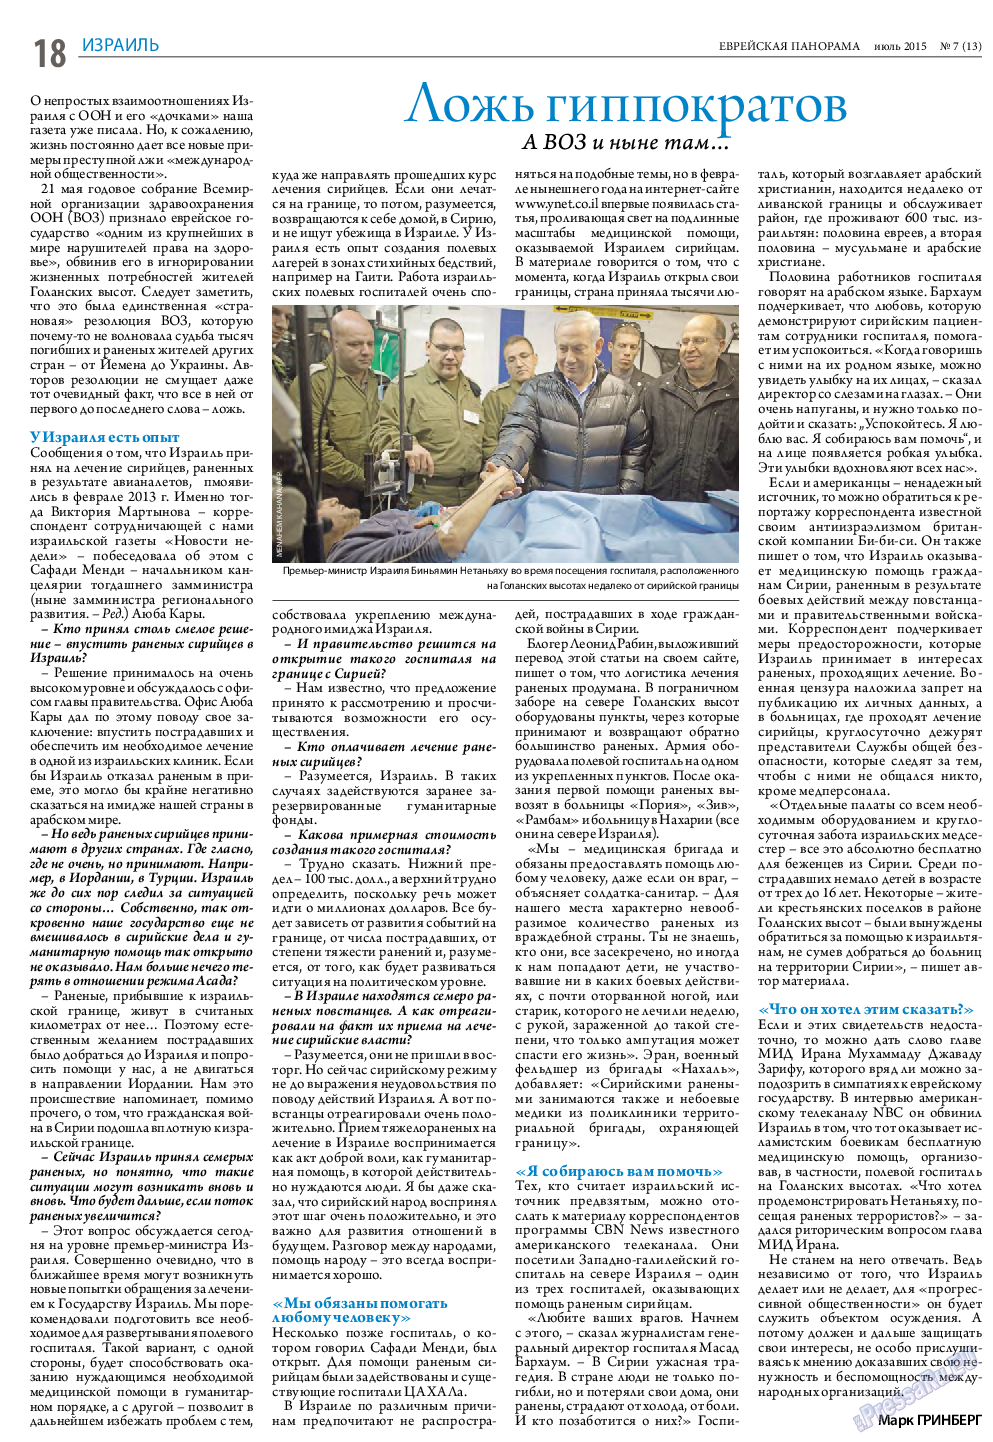 Еврейская панорама, газета. 2015 №7 стр.18